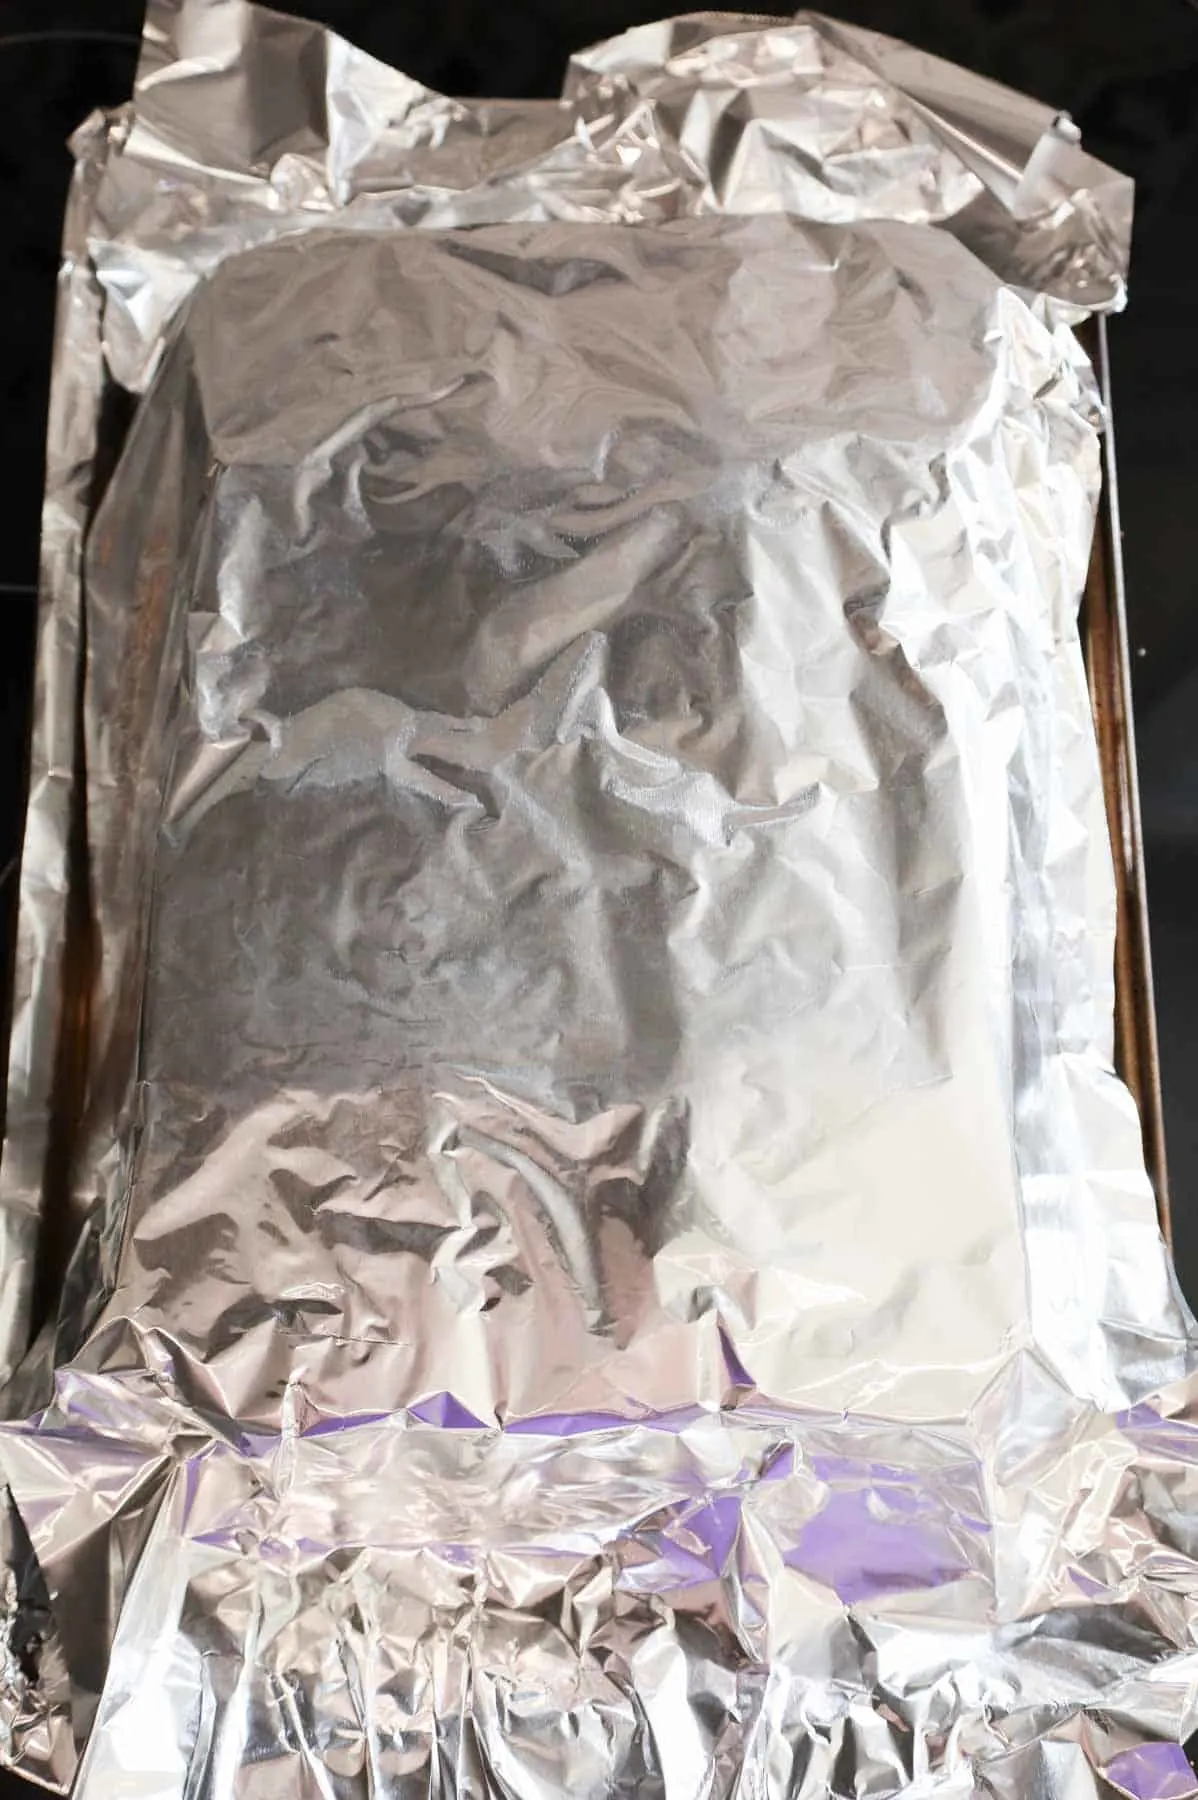 foil covered sliders on a baking sheet